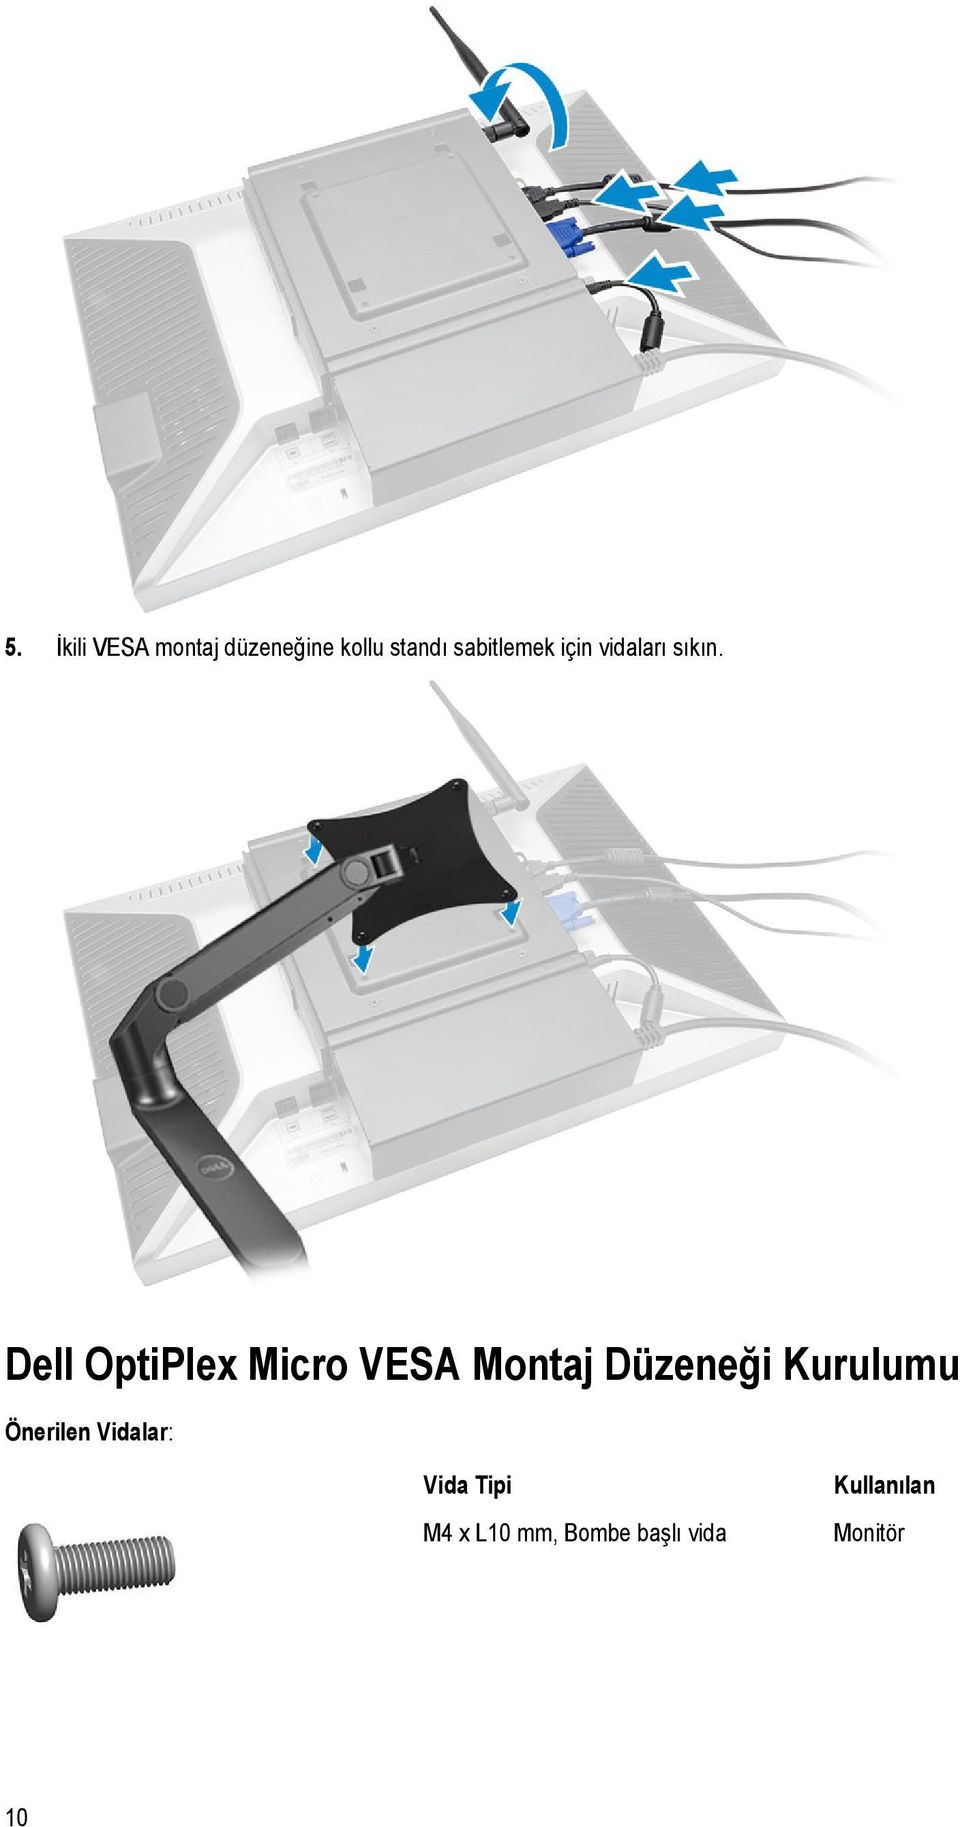 Dell OptiPlex Micro VESA Montaj Düzeneği Kurulumu